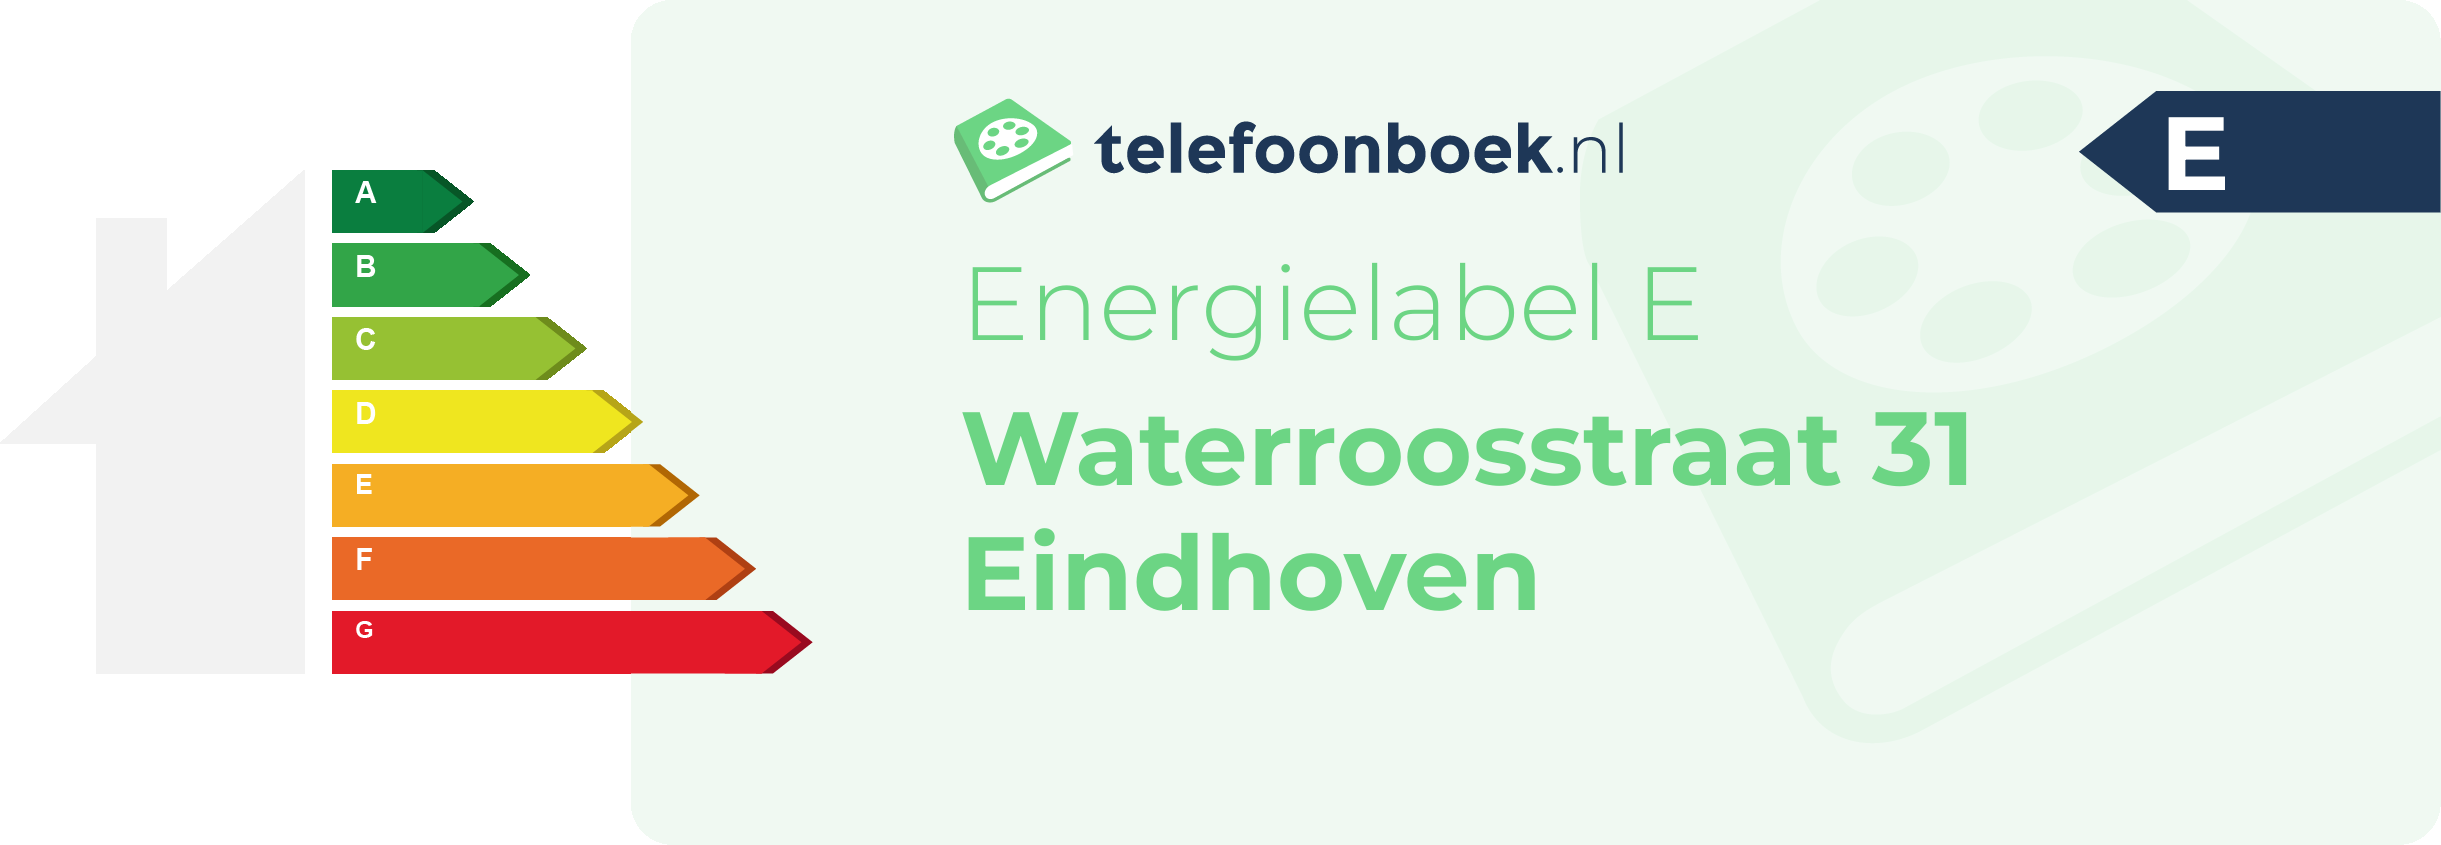 Energielabel Waterroosstraat 31 Eindhoven